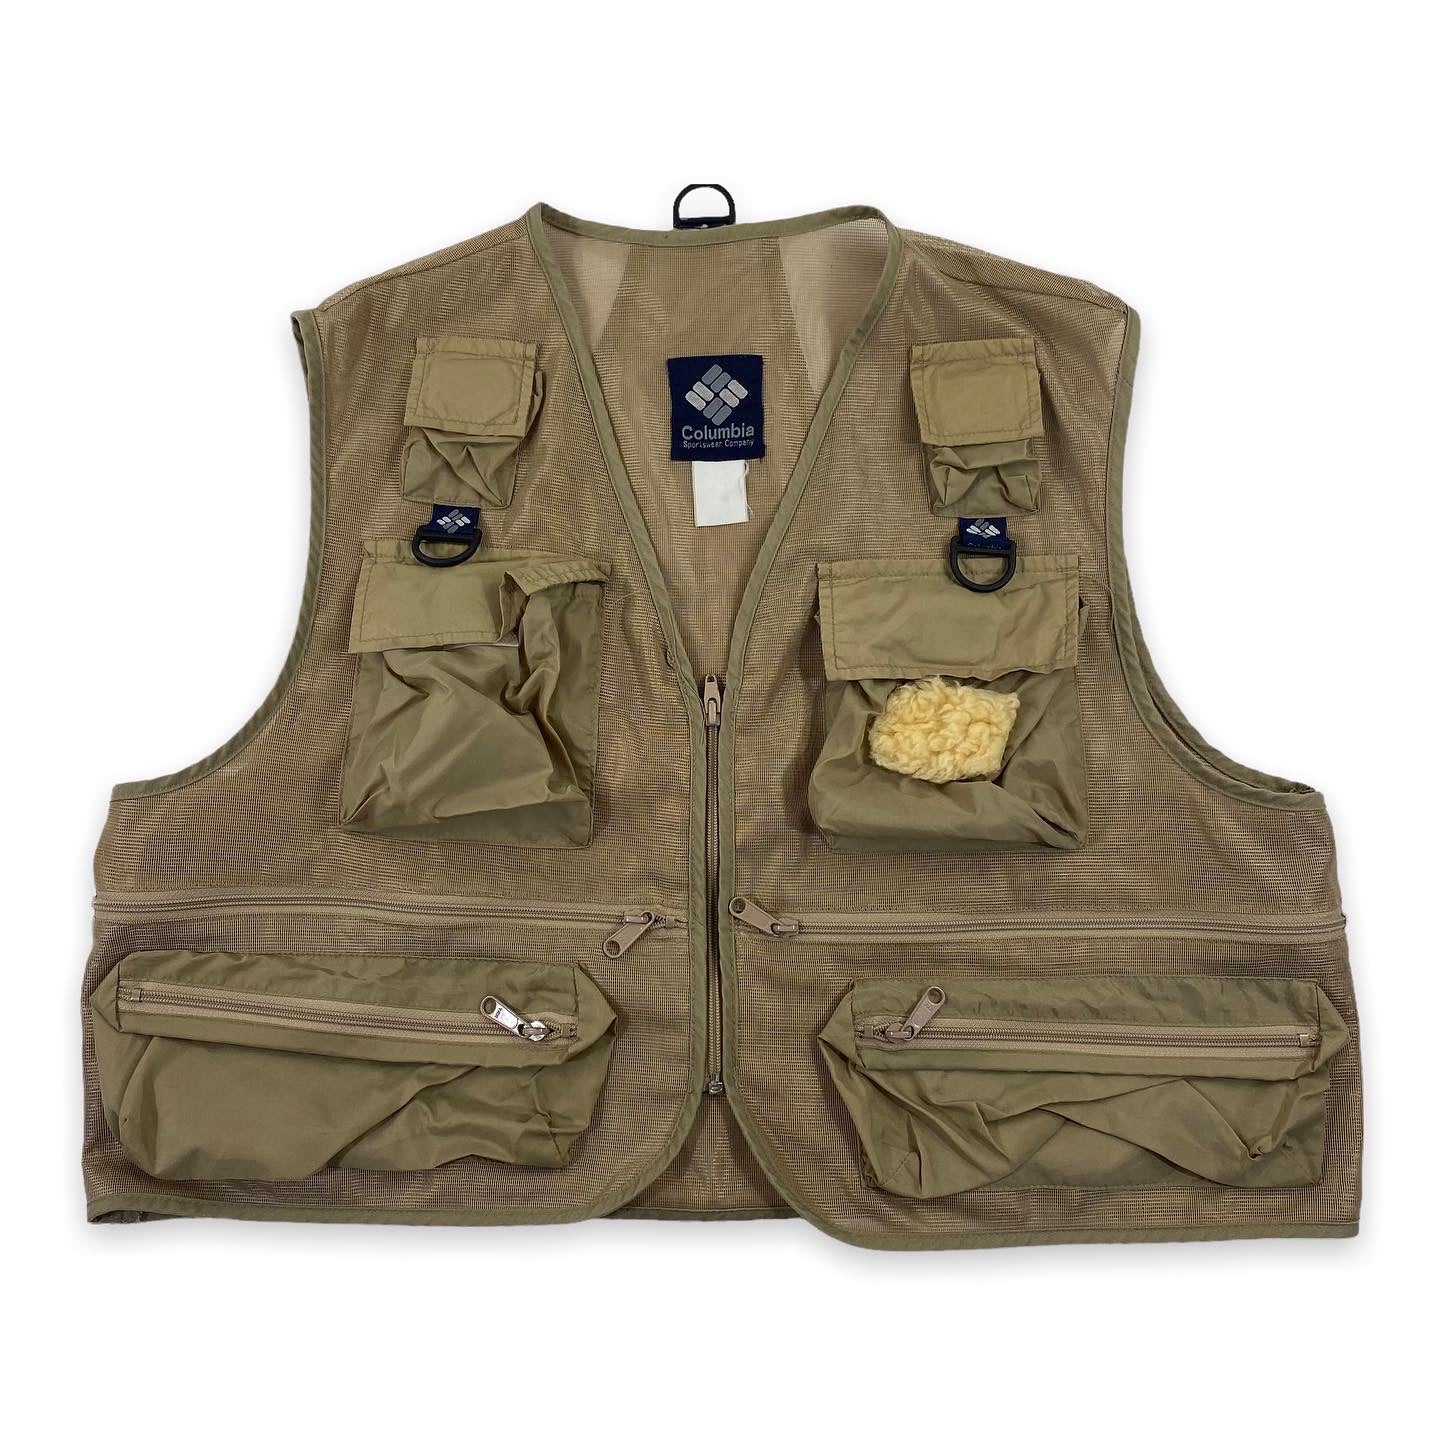 Vintage Columbia Fishing Vest Size Medium Also Has Northwest Steelhead Patch